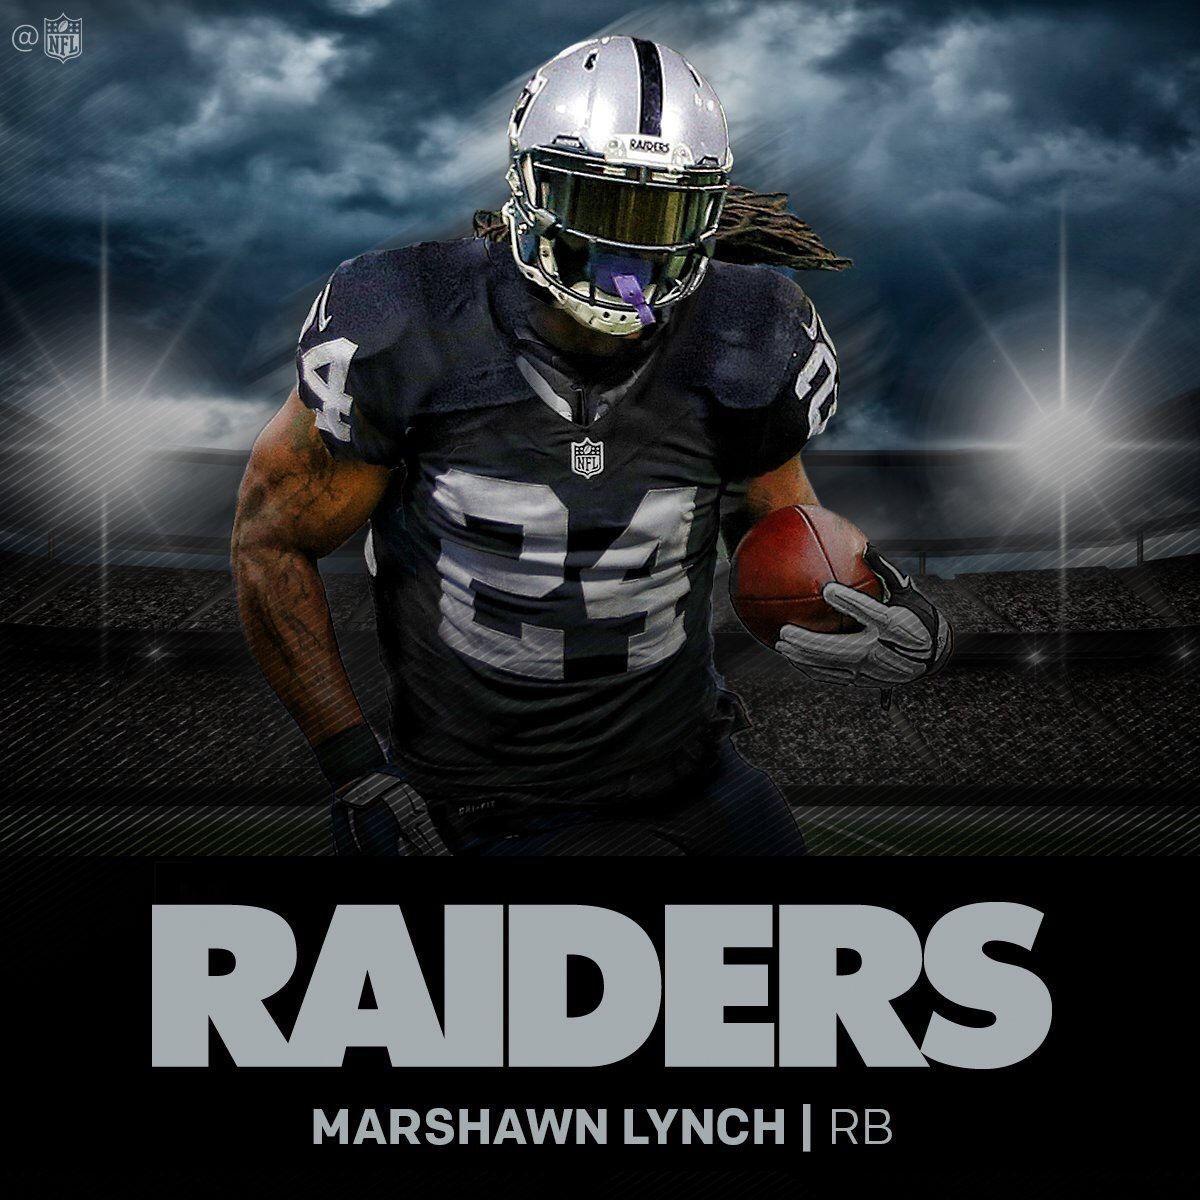 Marshawn Lynch to wear Raiders legendary number 24